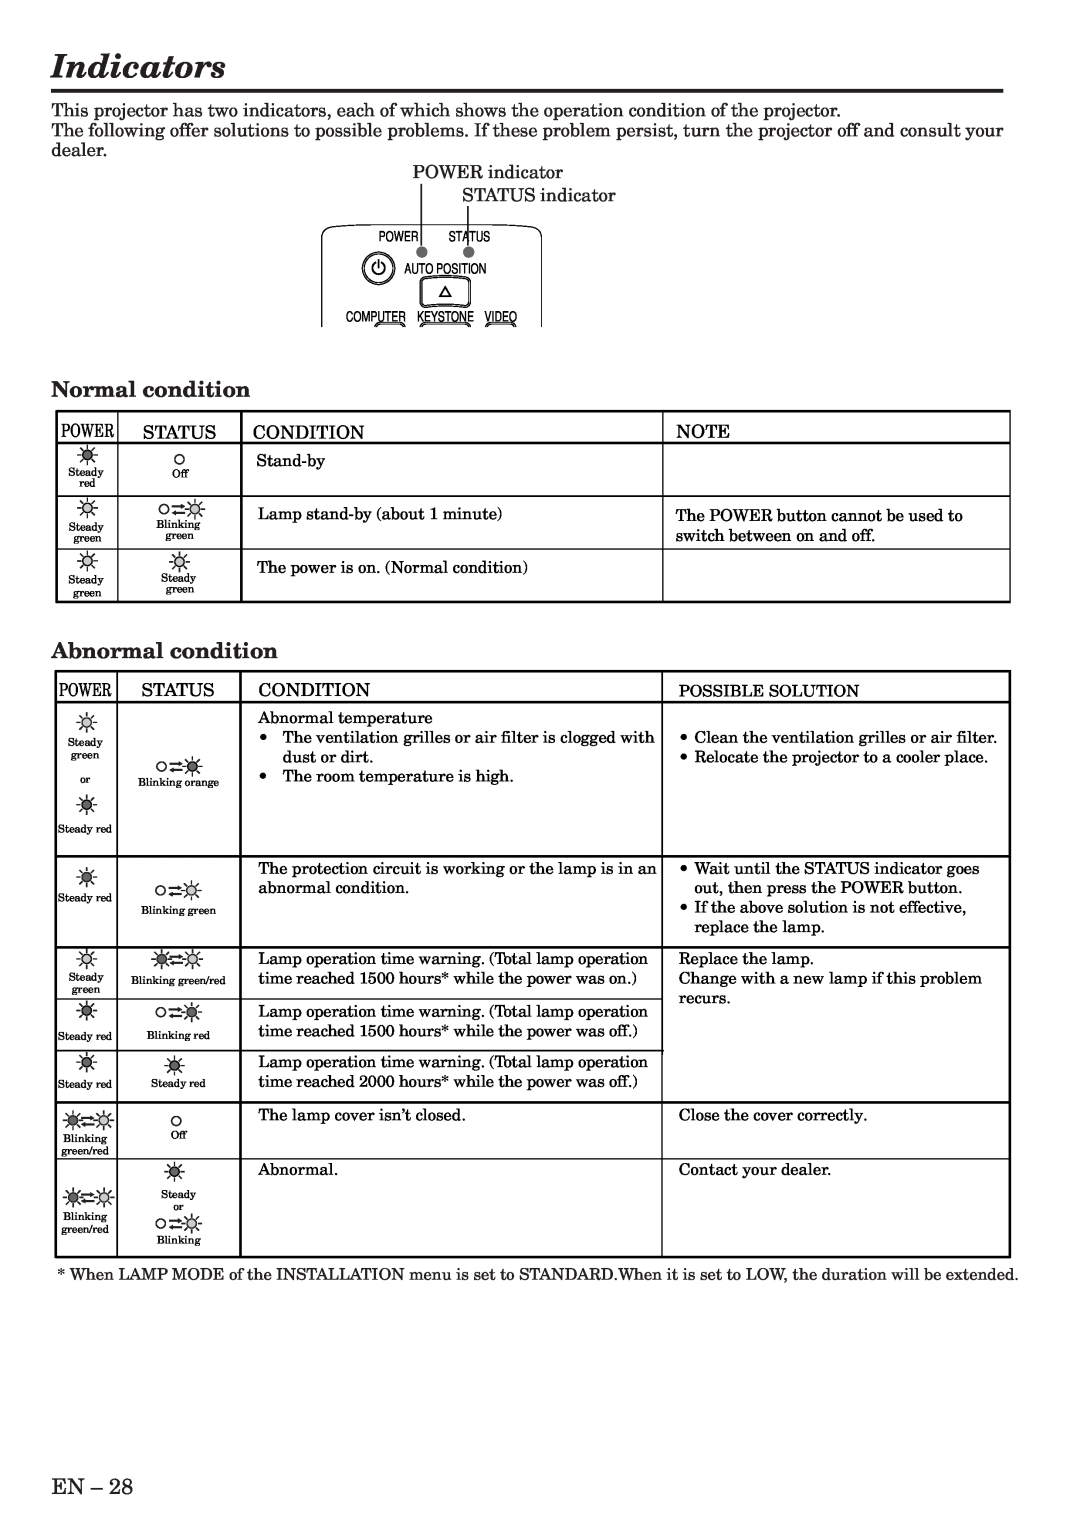 Mitsubishi Electronics XL6U user manual Indicators, Normal condition, Abnormal condition 